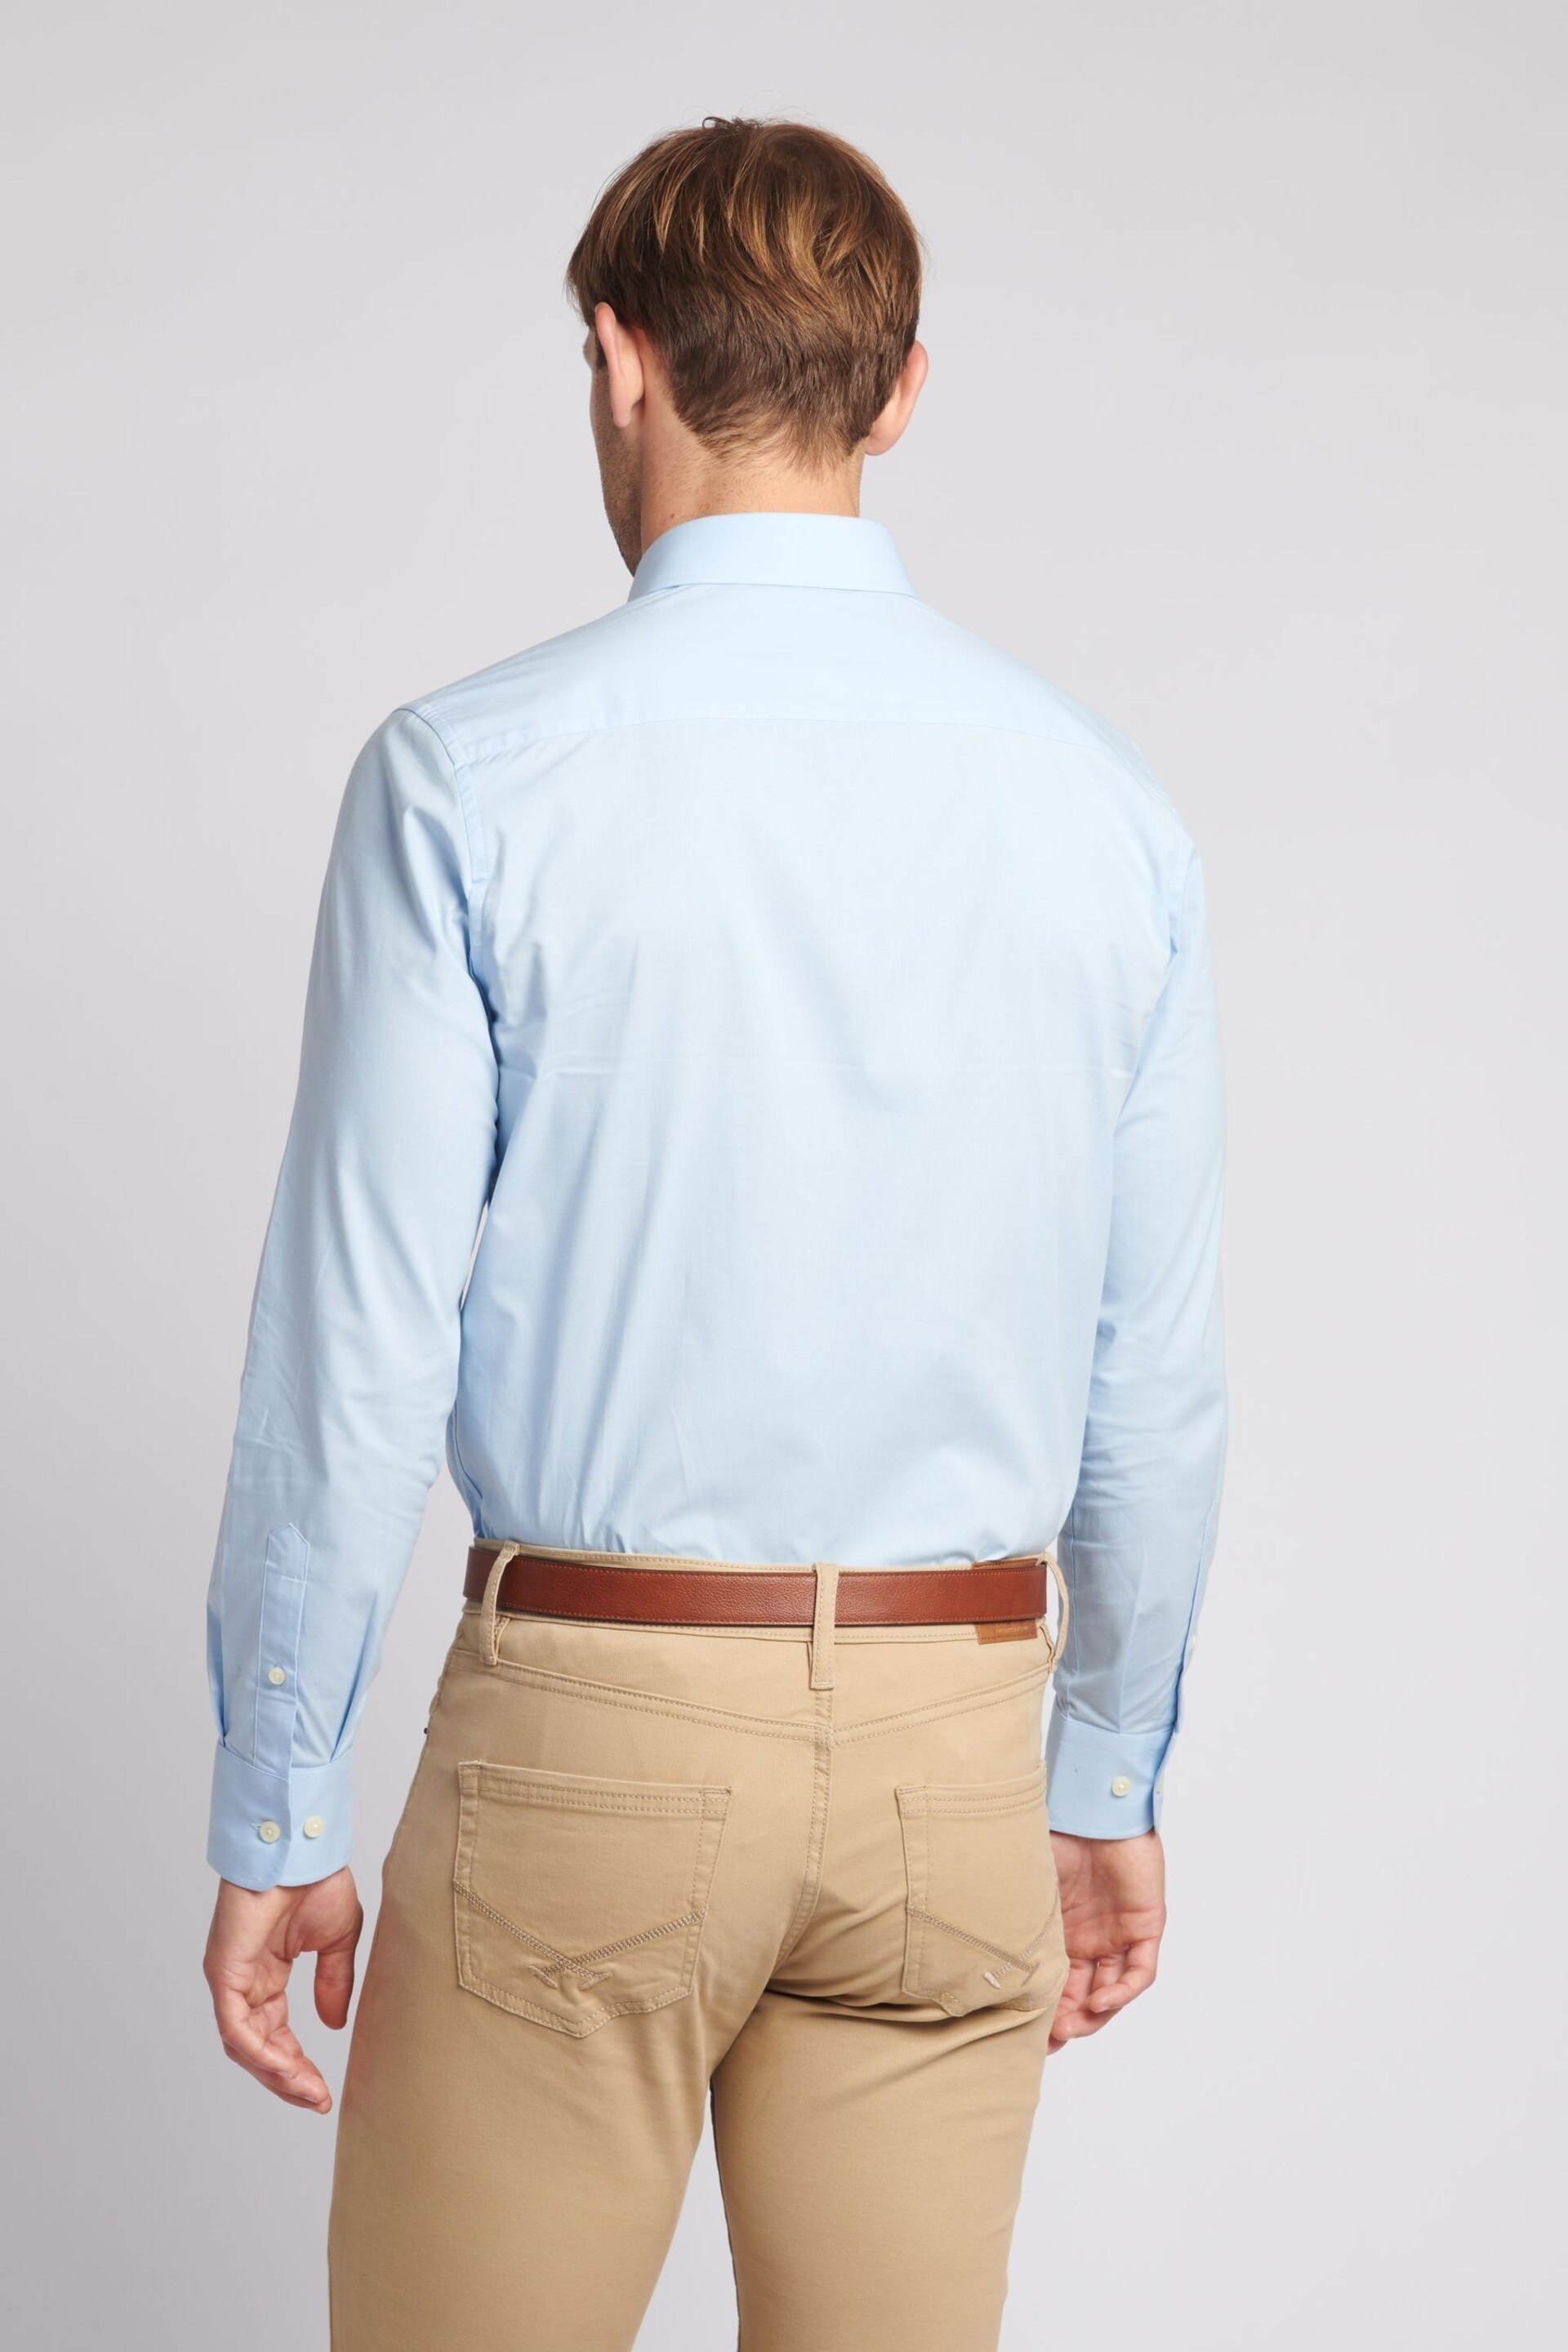 U.S. Polo Assn. Mens Long Sleeve Poplin Shirt - Image 4 of 8